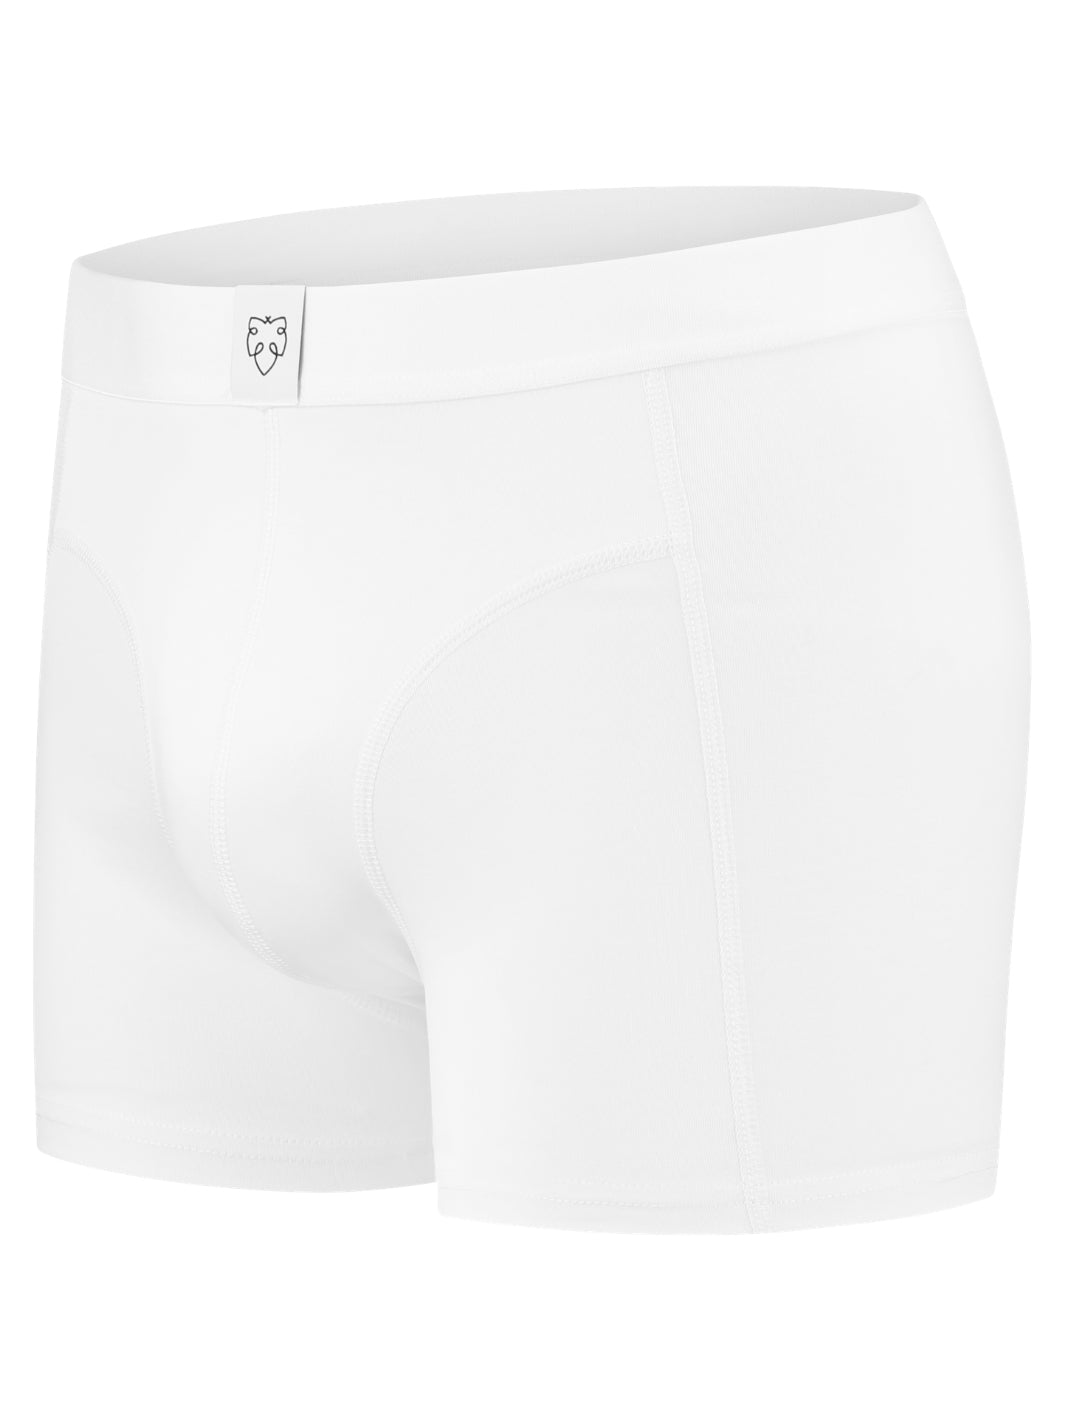 A-dam pánské boxerky z biobavlny bílé detail z boku